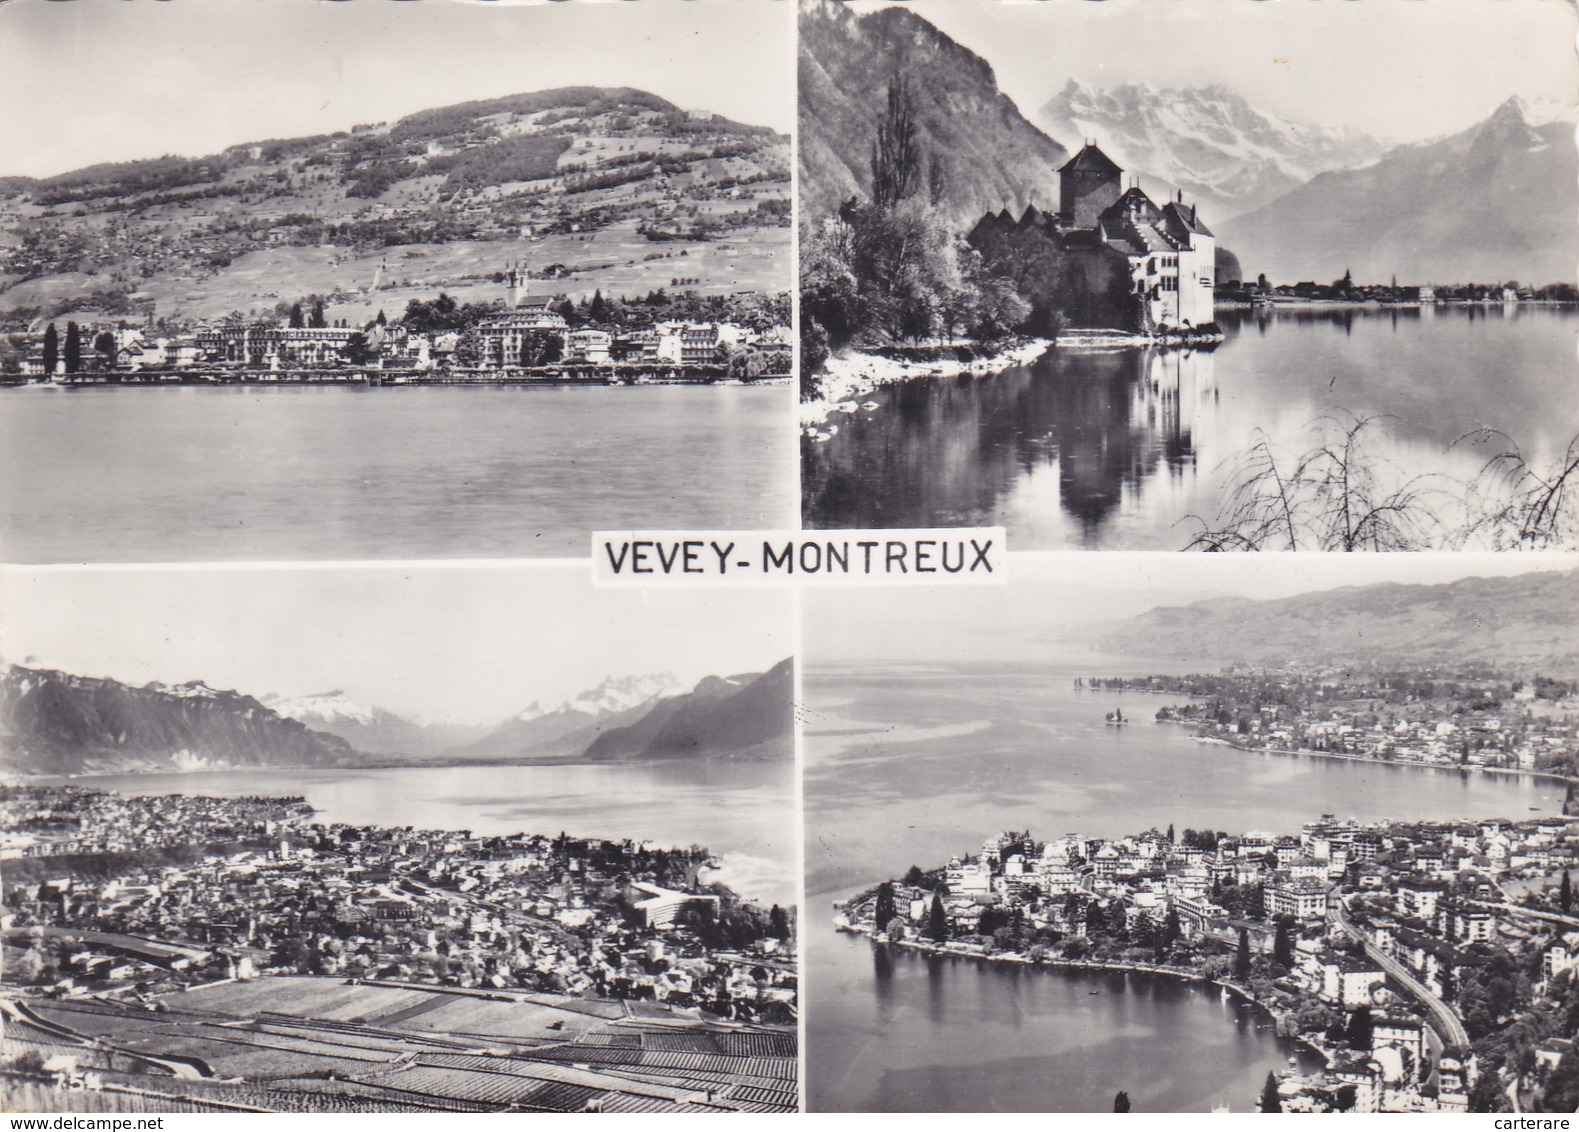 SUISSE,HELVETIA,SWISS,SCHWEIZ,SVIZZERA,SWITZERLAND,VAUD,VEVEY,MONTREUX,CARTE PHOTO MONTAGE - Montreux